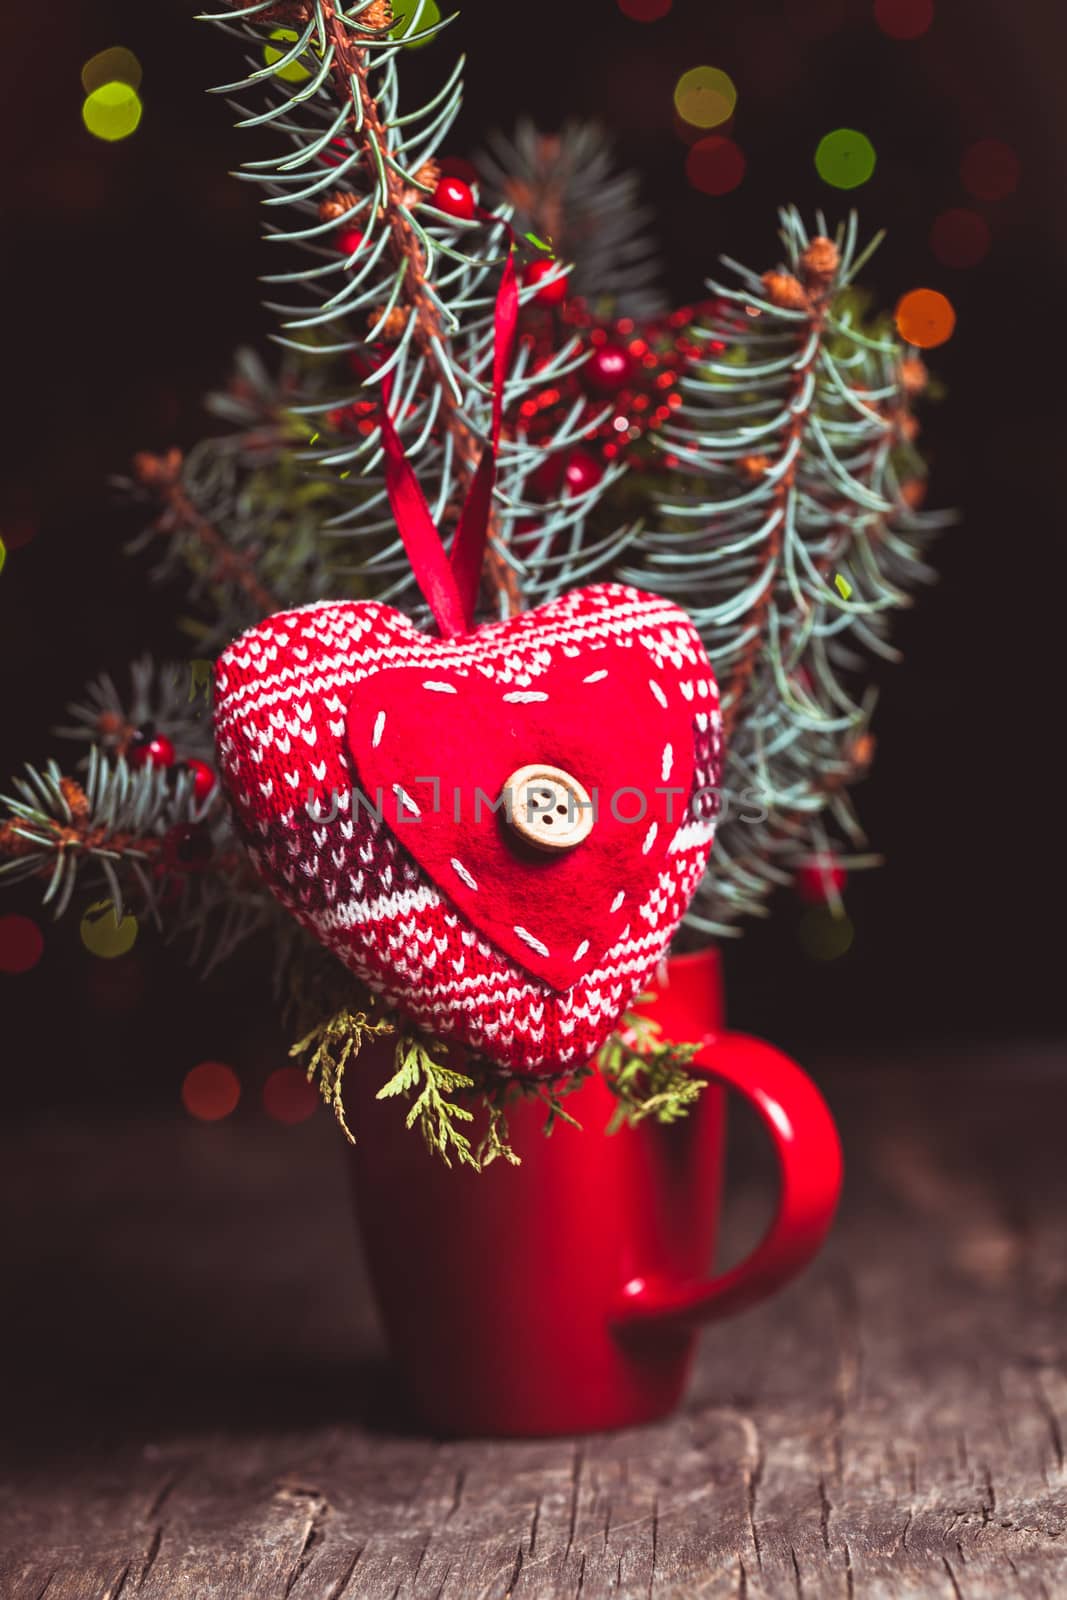 Handmade knitted heart - christmas decoration on the fir branch